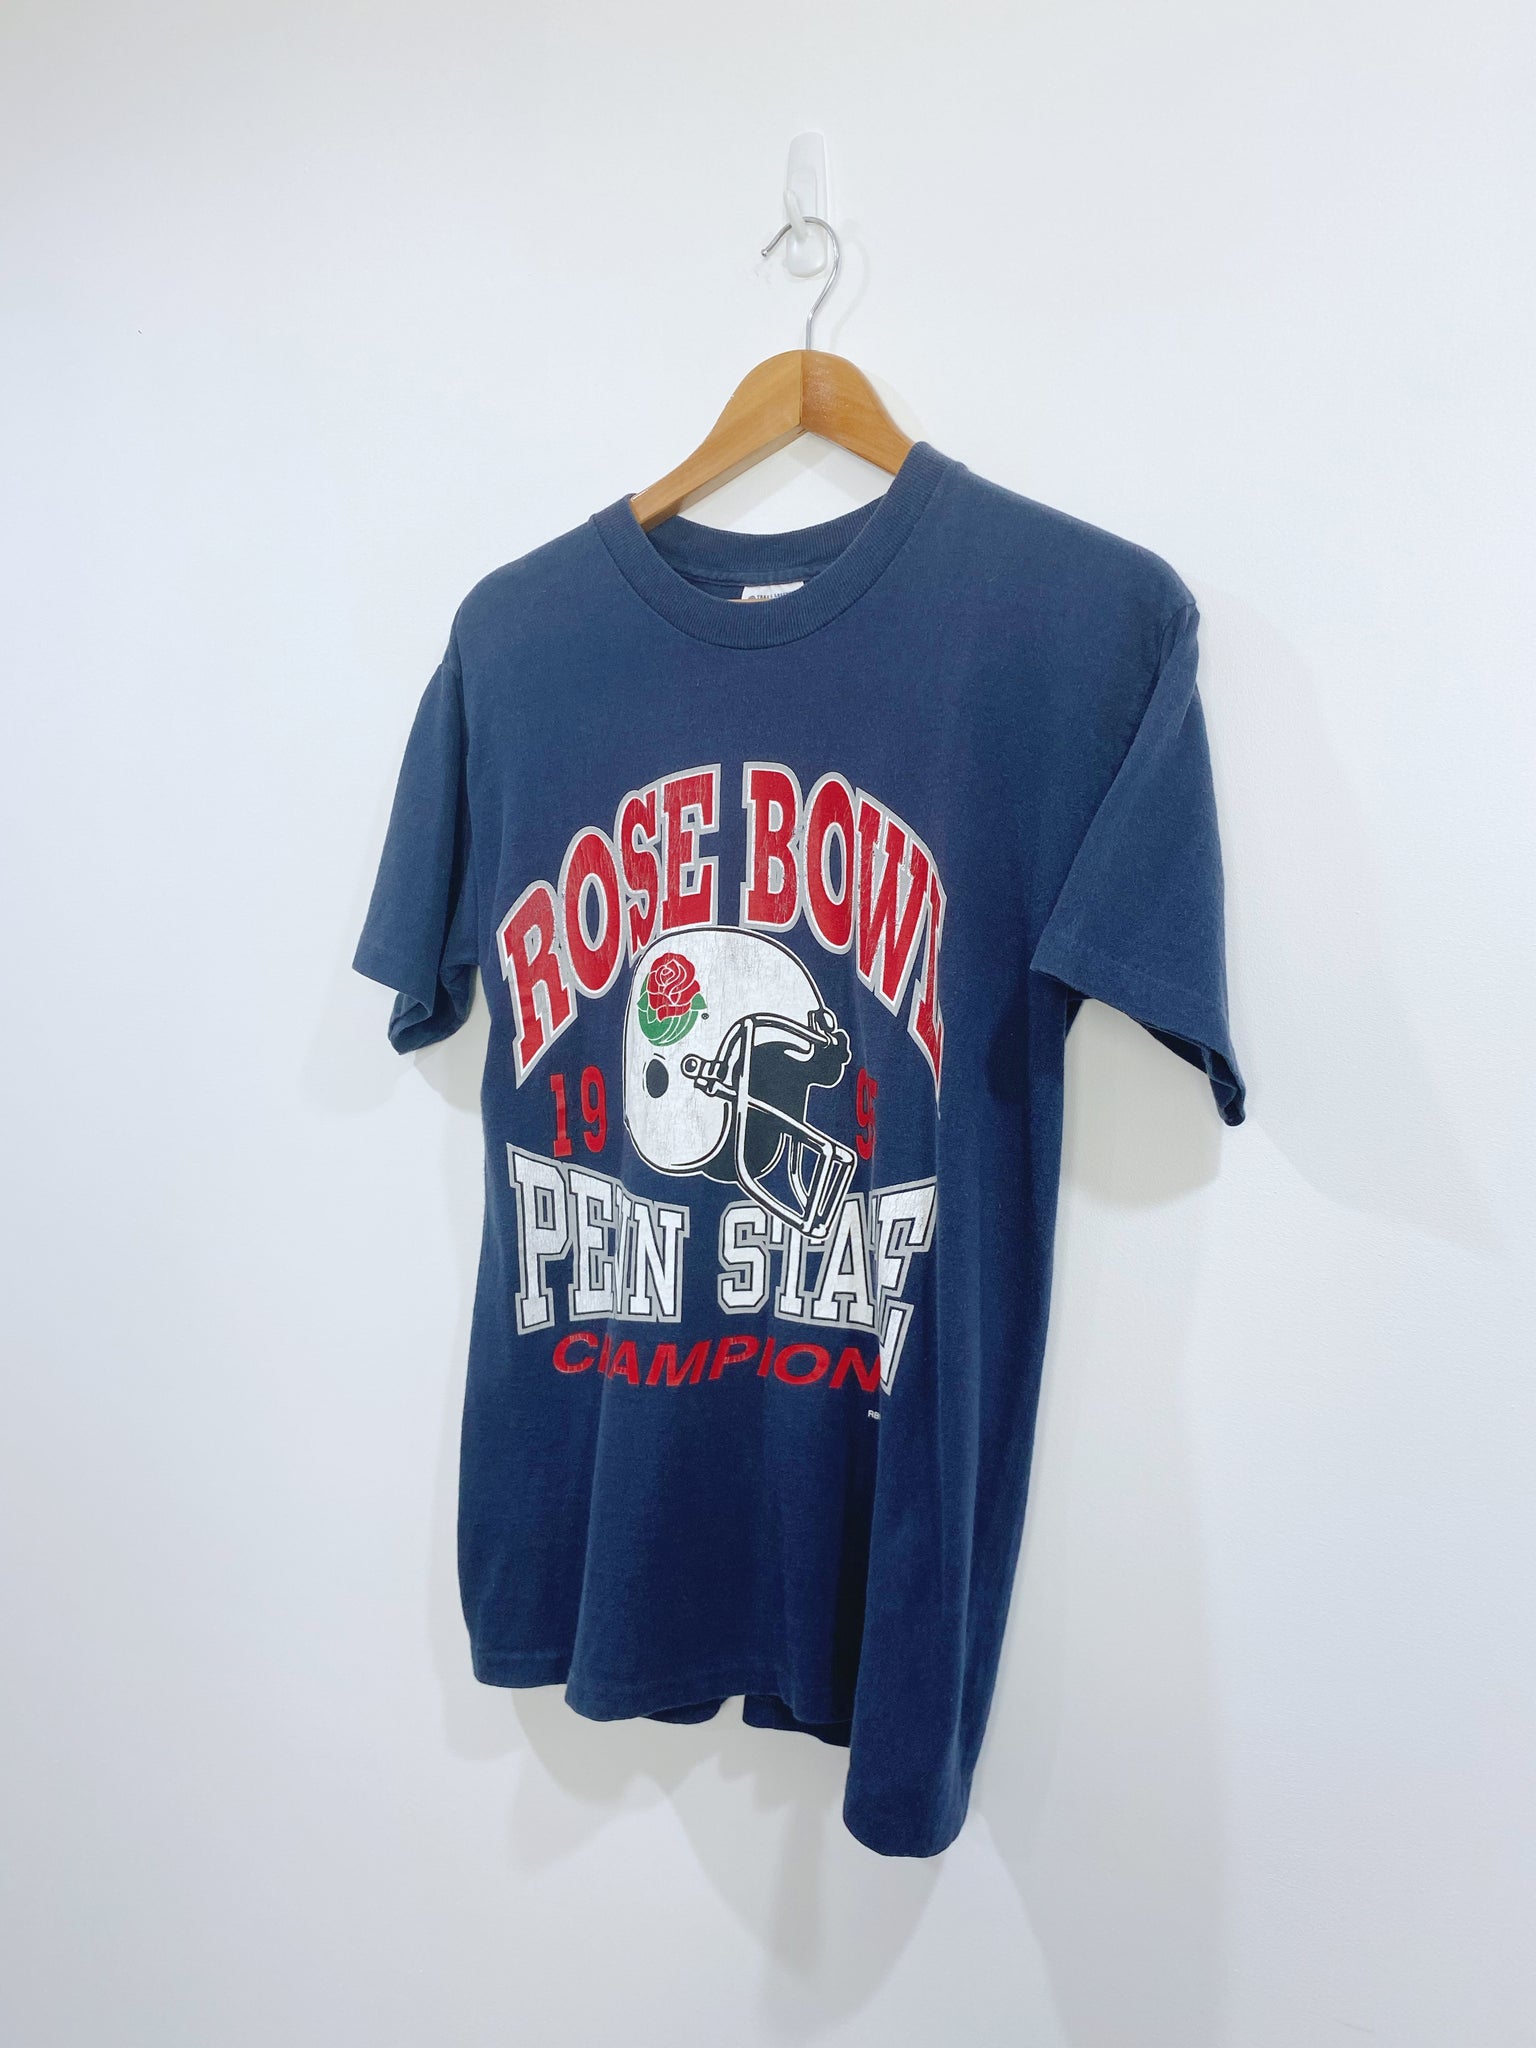 Vintage 1995 Penn State Championship T-shirt M